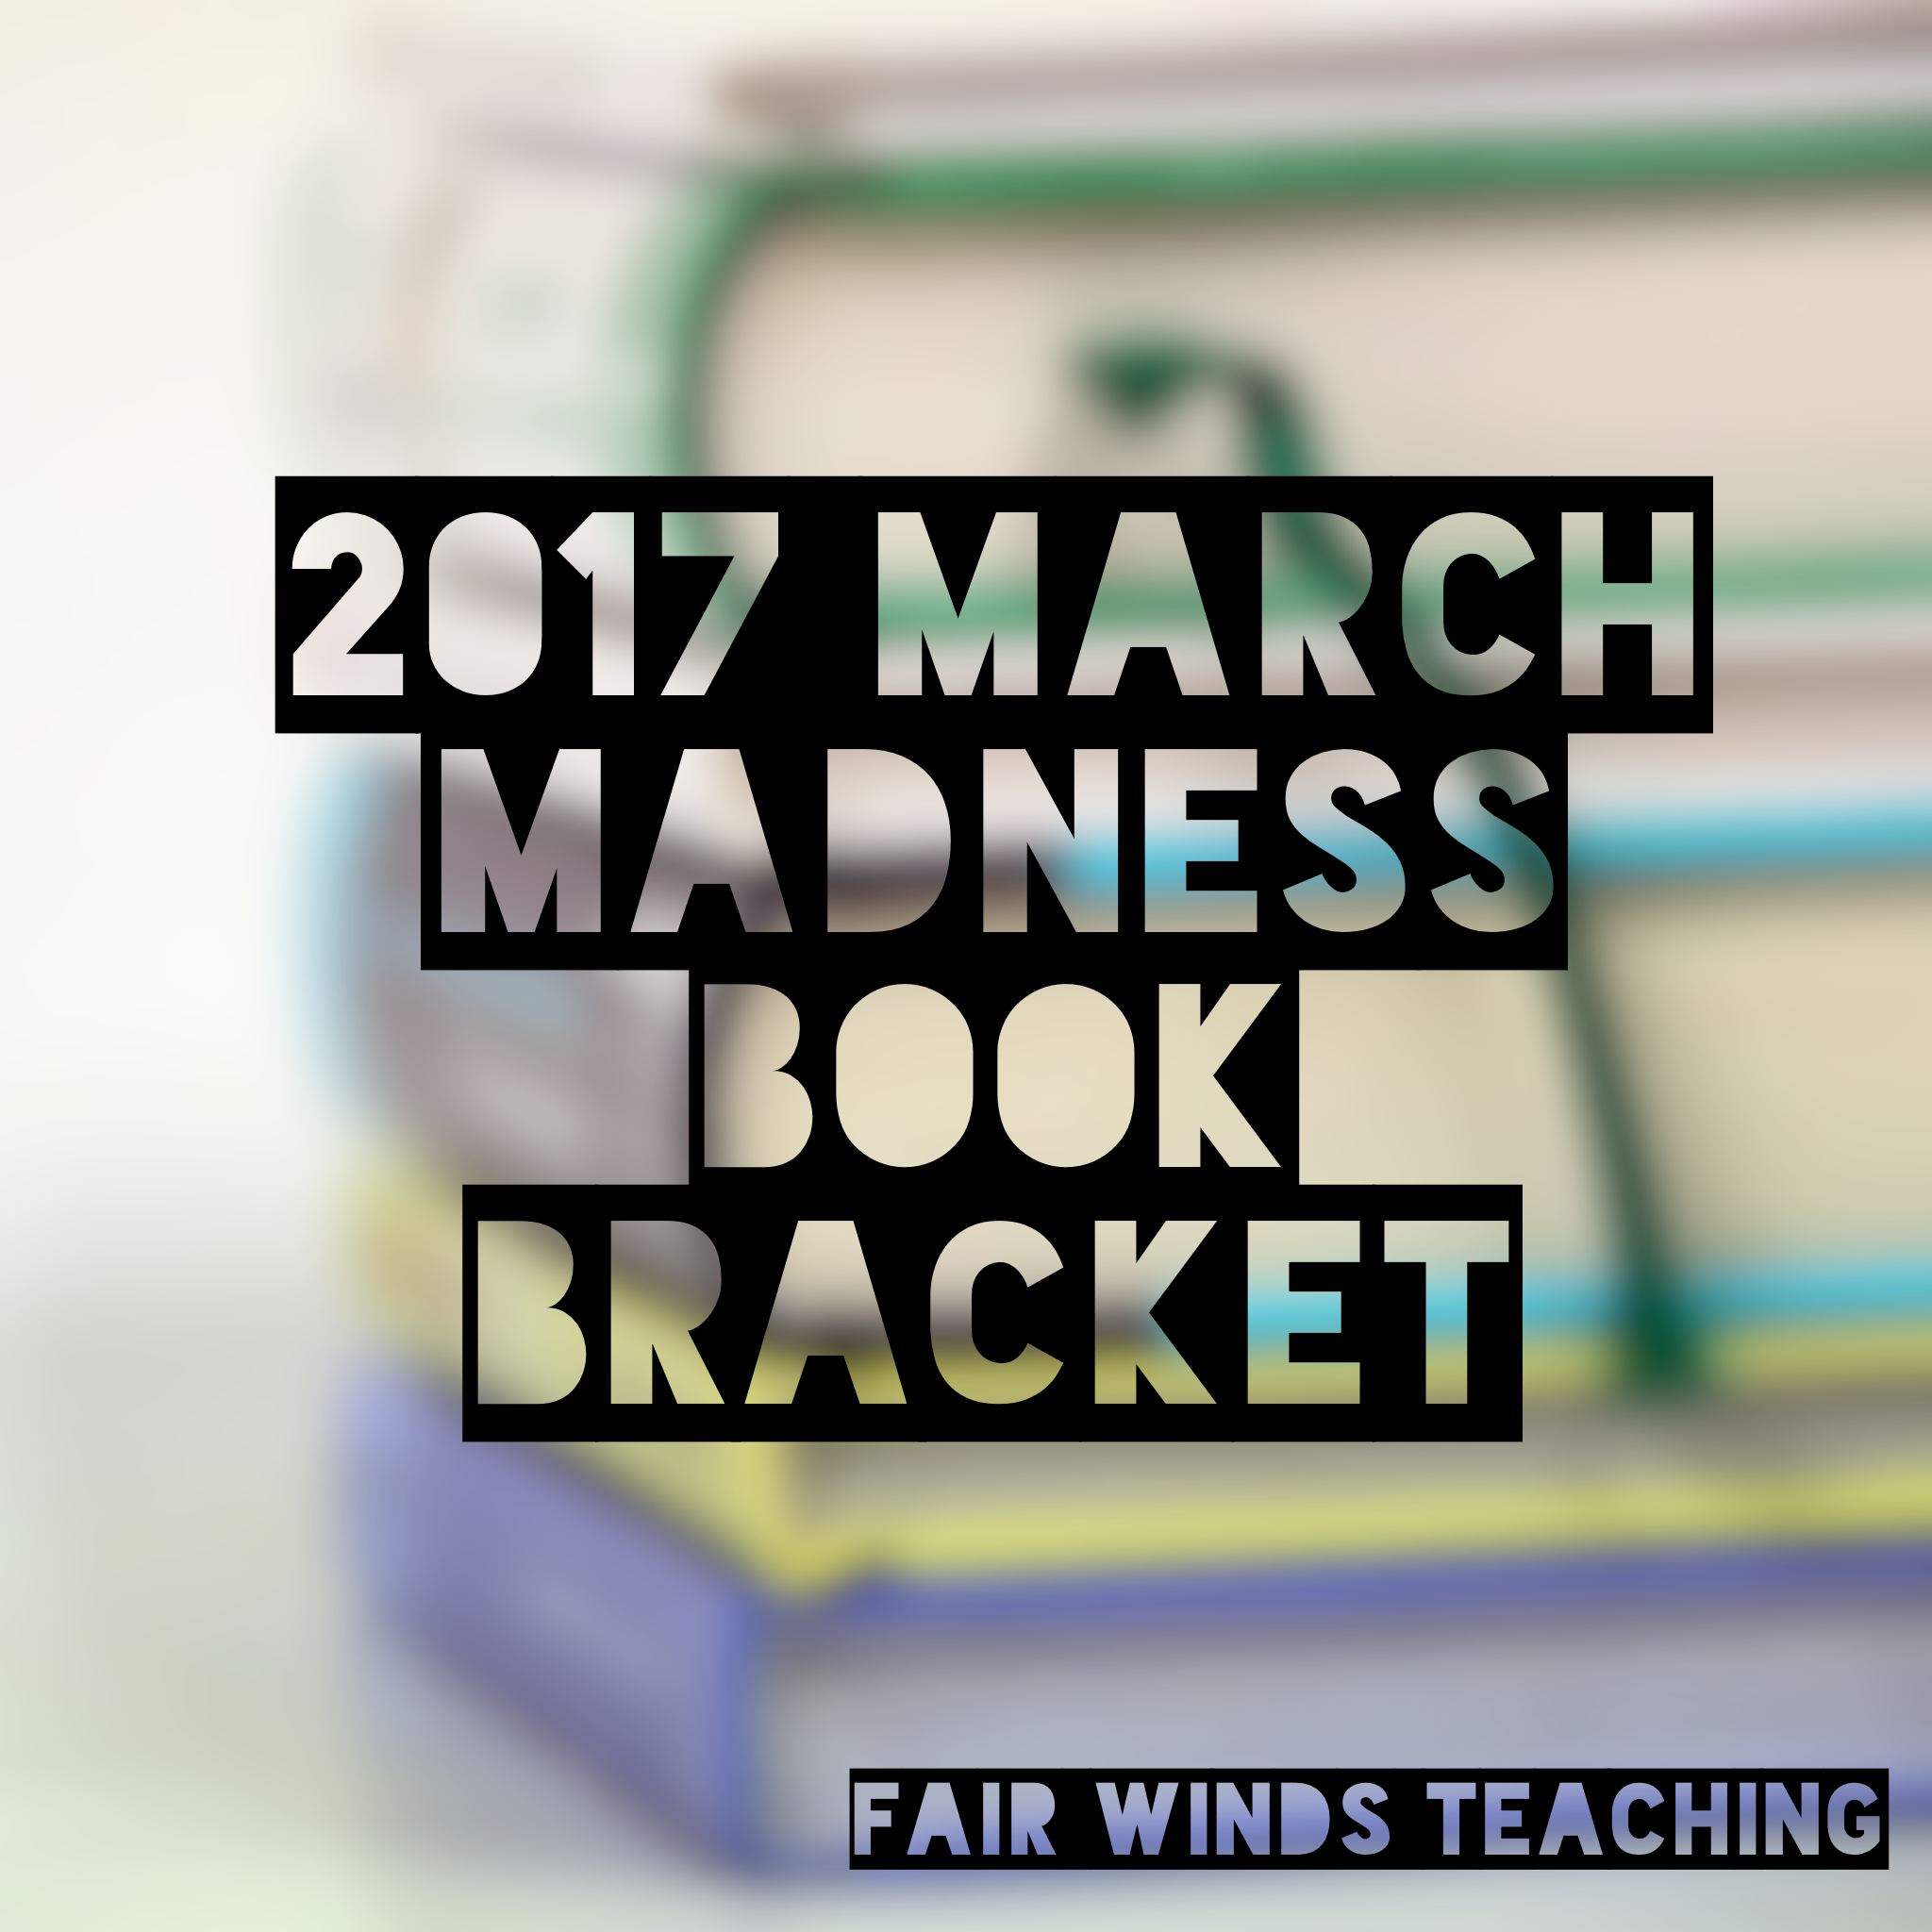 2017 March Madness Book Bracket